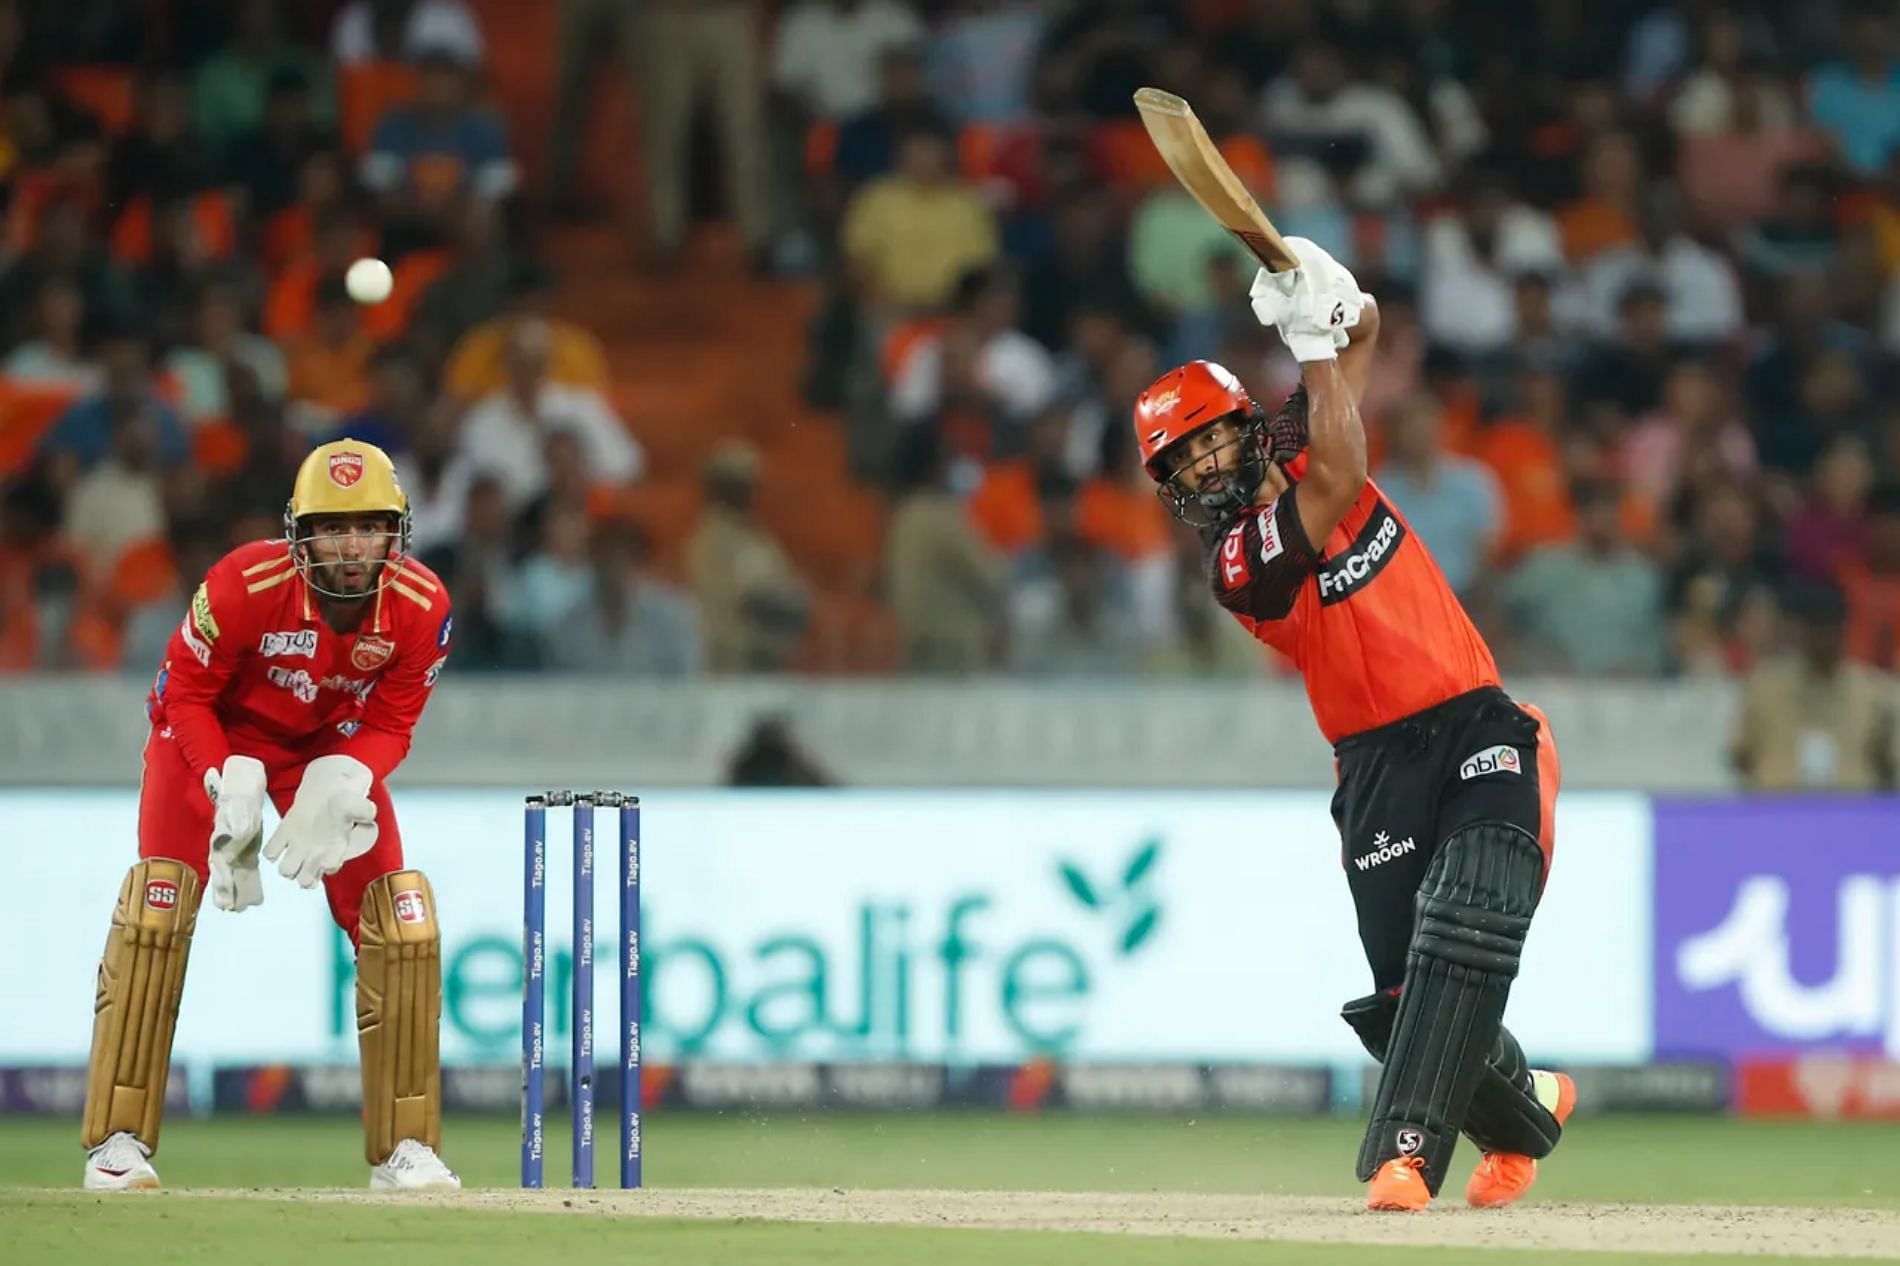 Rahul Tripathi has played some impressive knocks for Hyderabad. (Pic: iplt20.com)